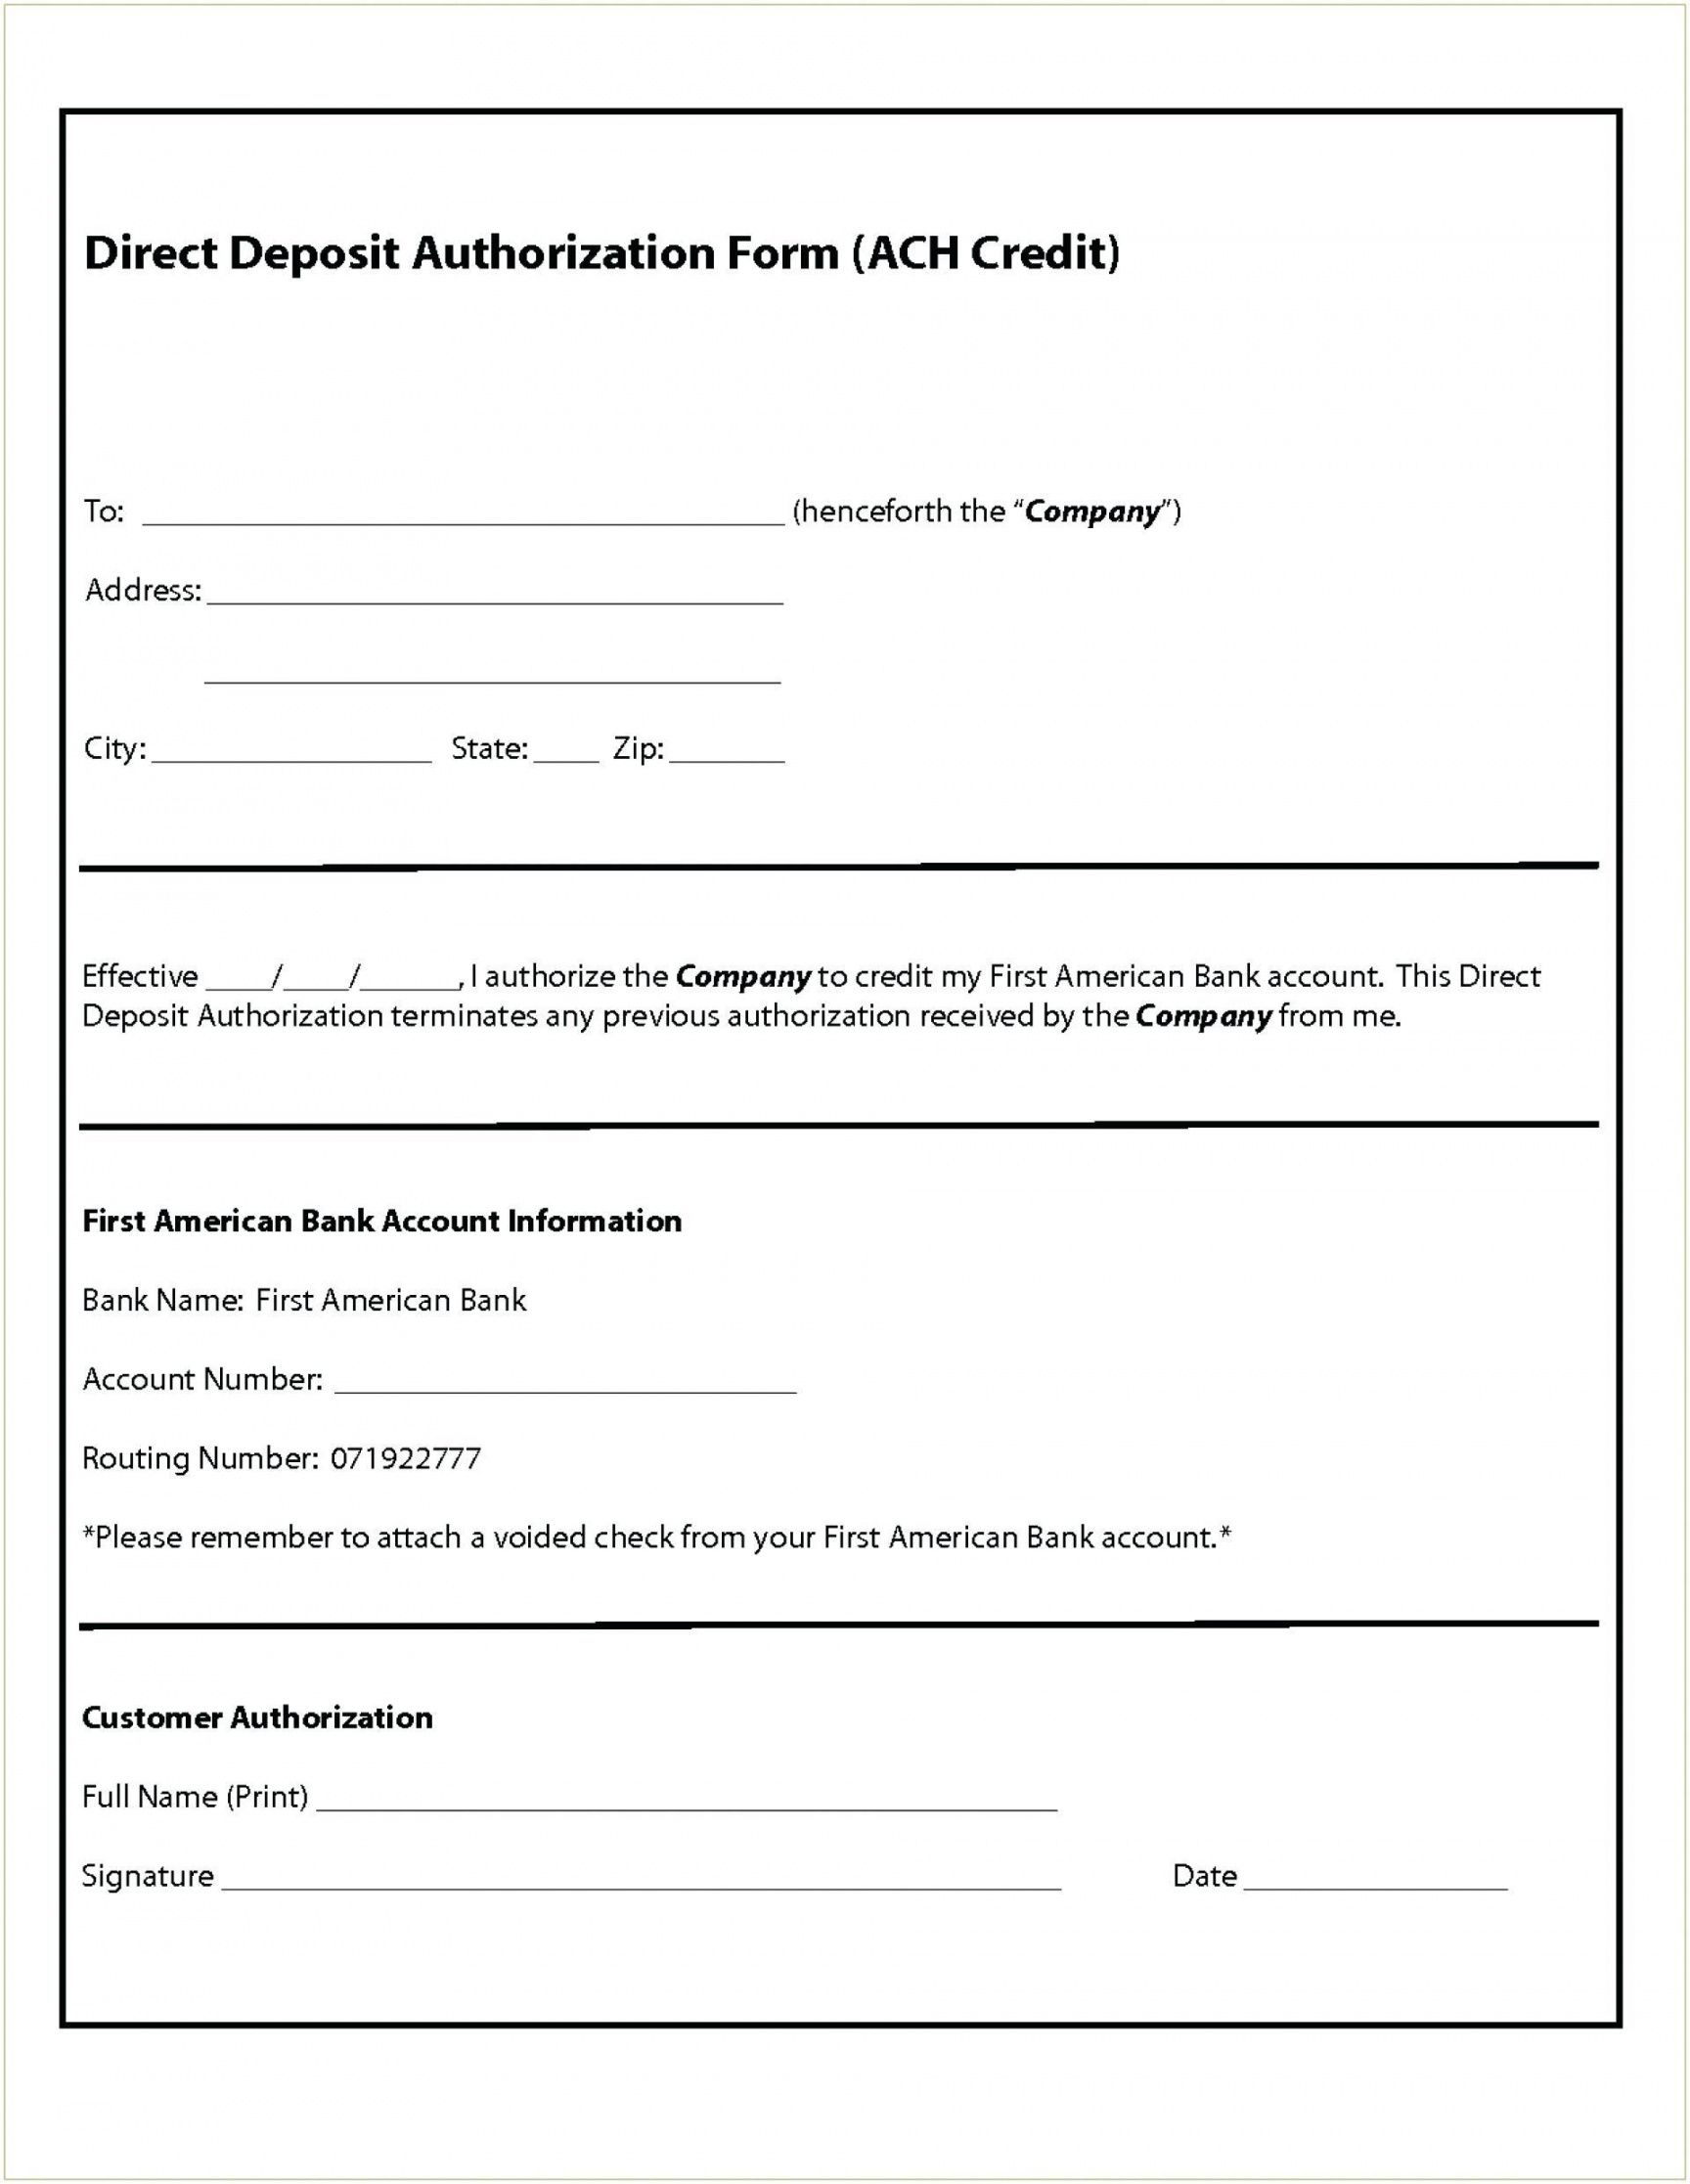 editable 015 ach direct deposit authorization form template breatht payroll direct deposit authorization form template sample